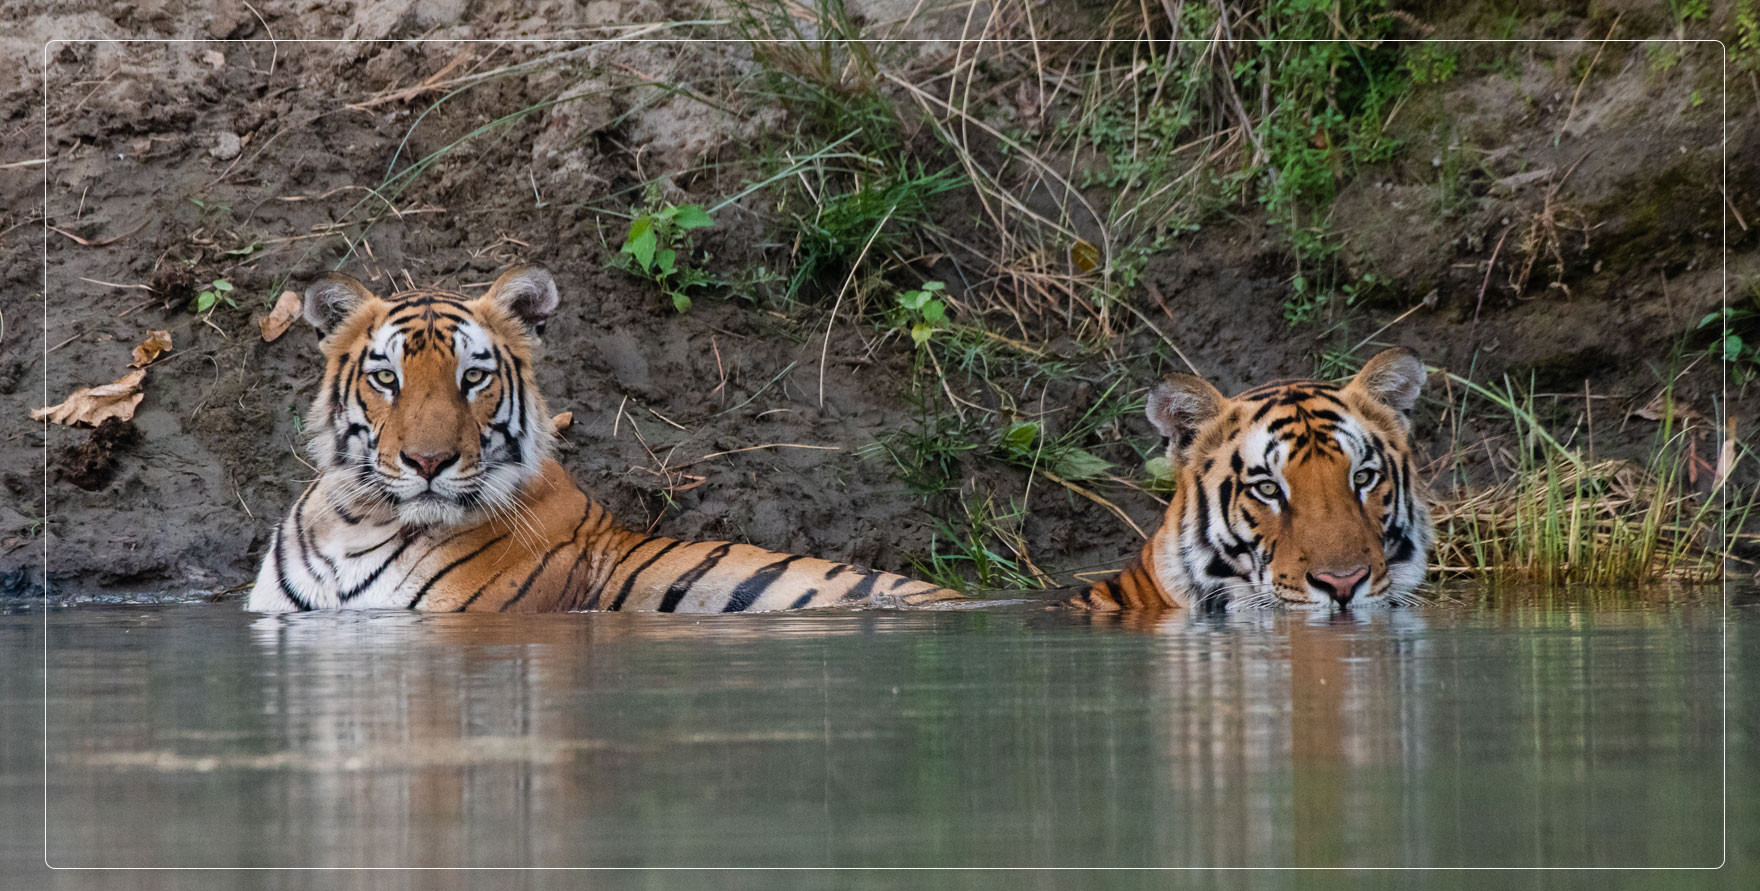 deepak rajbangshi-wildlife photographer-photo-tiger-bardiya 71706920097.jpg